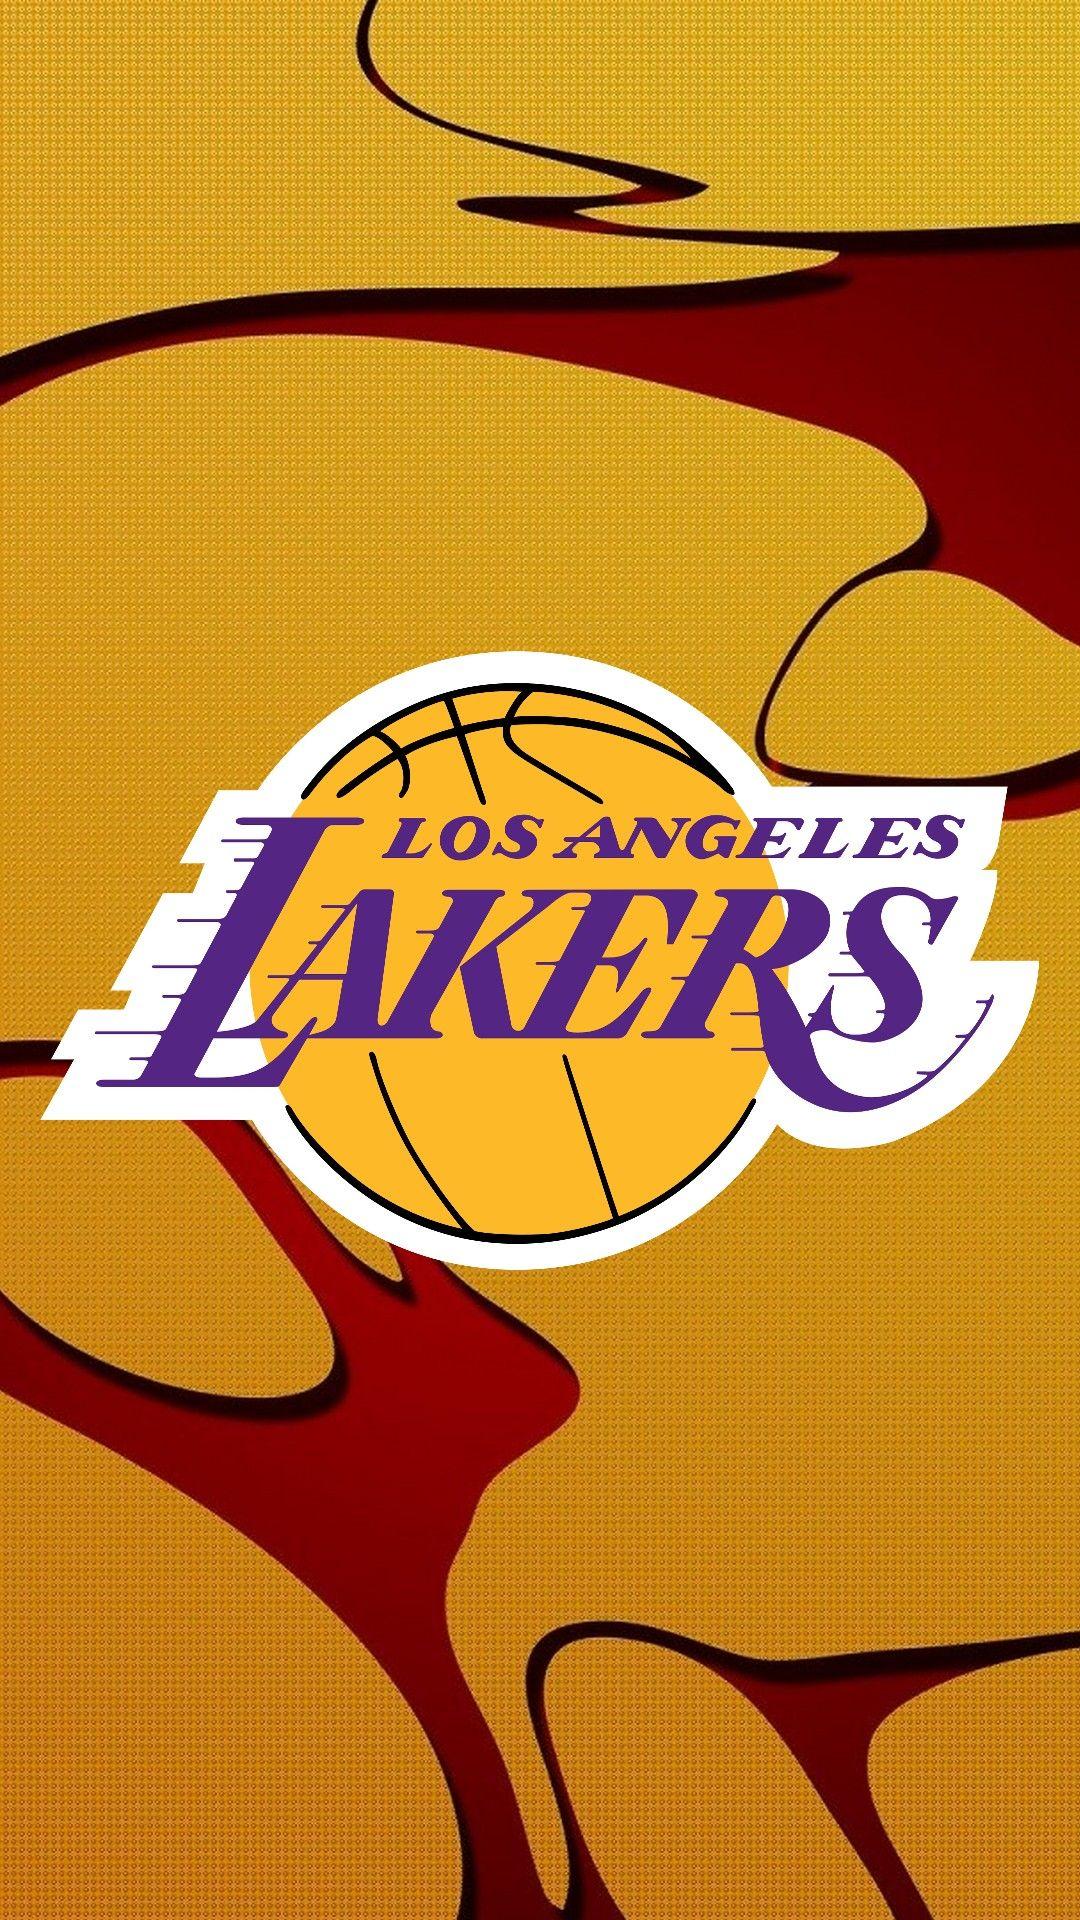 Download La Lakers Wallpaper Hd HD Backgrounds Download  Lakers wallpaper  Basketball wallpaper Kobe bryant wallpaper